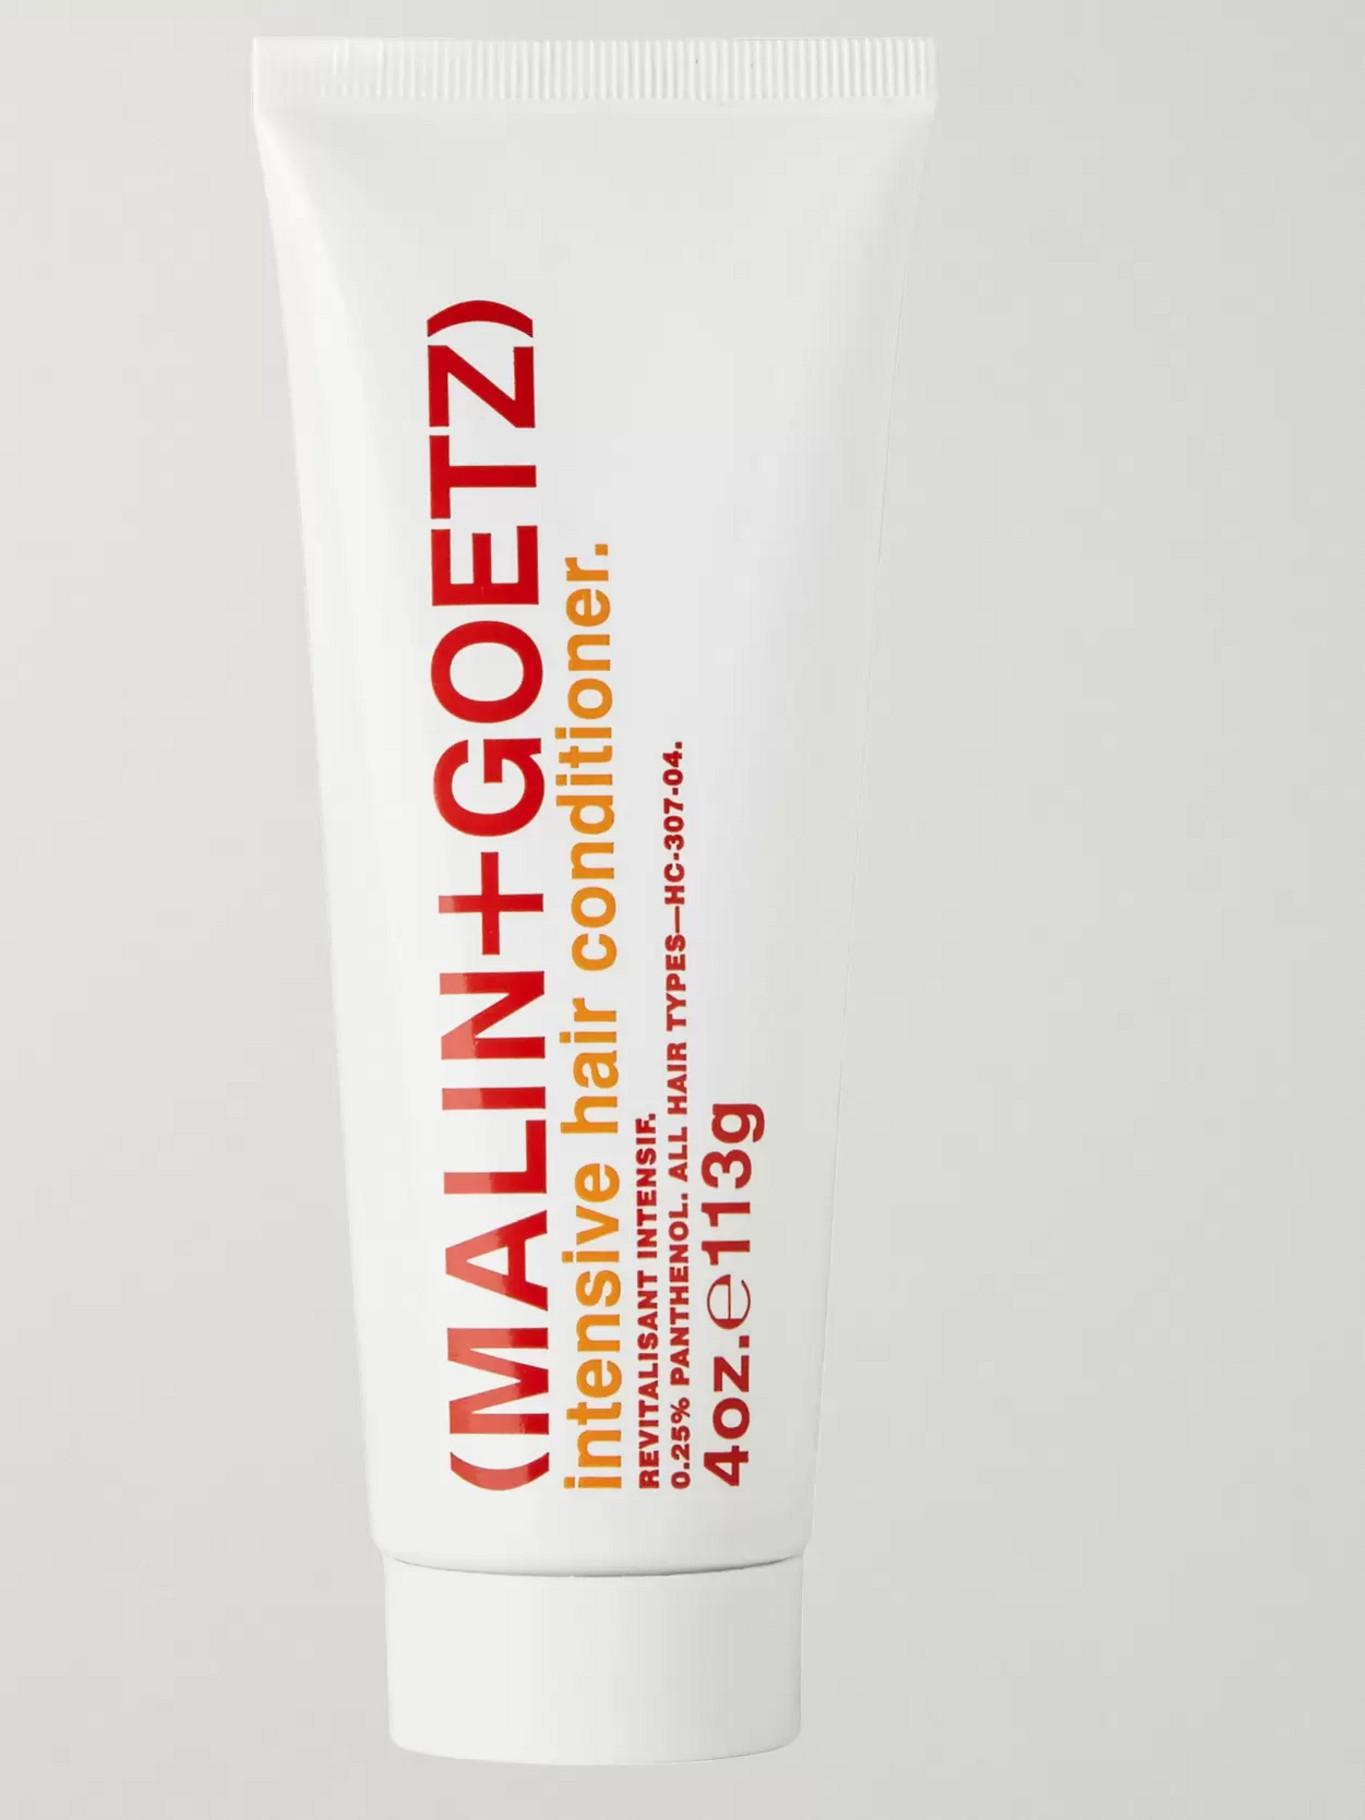 Malin + Goetz Intensive Hair Conditioner